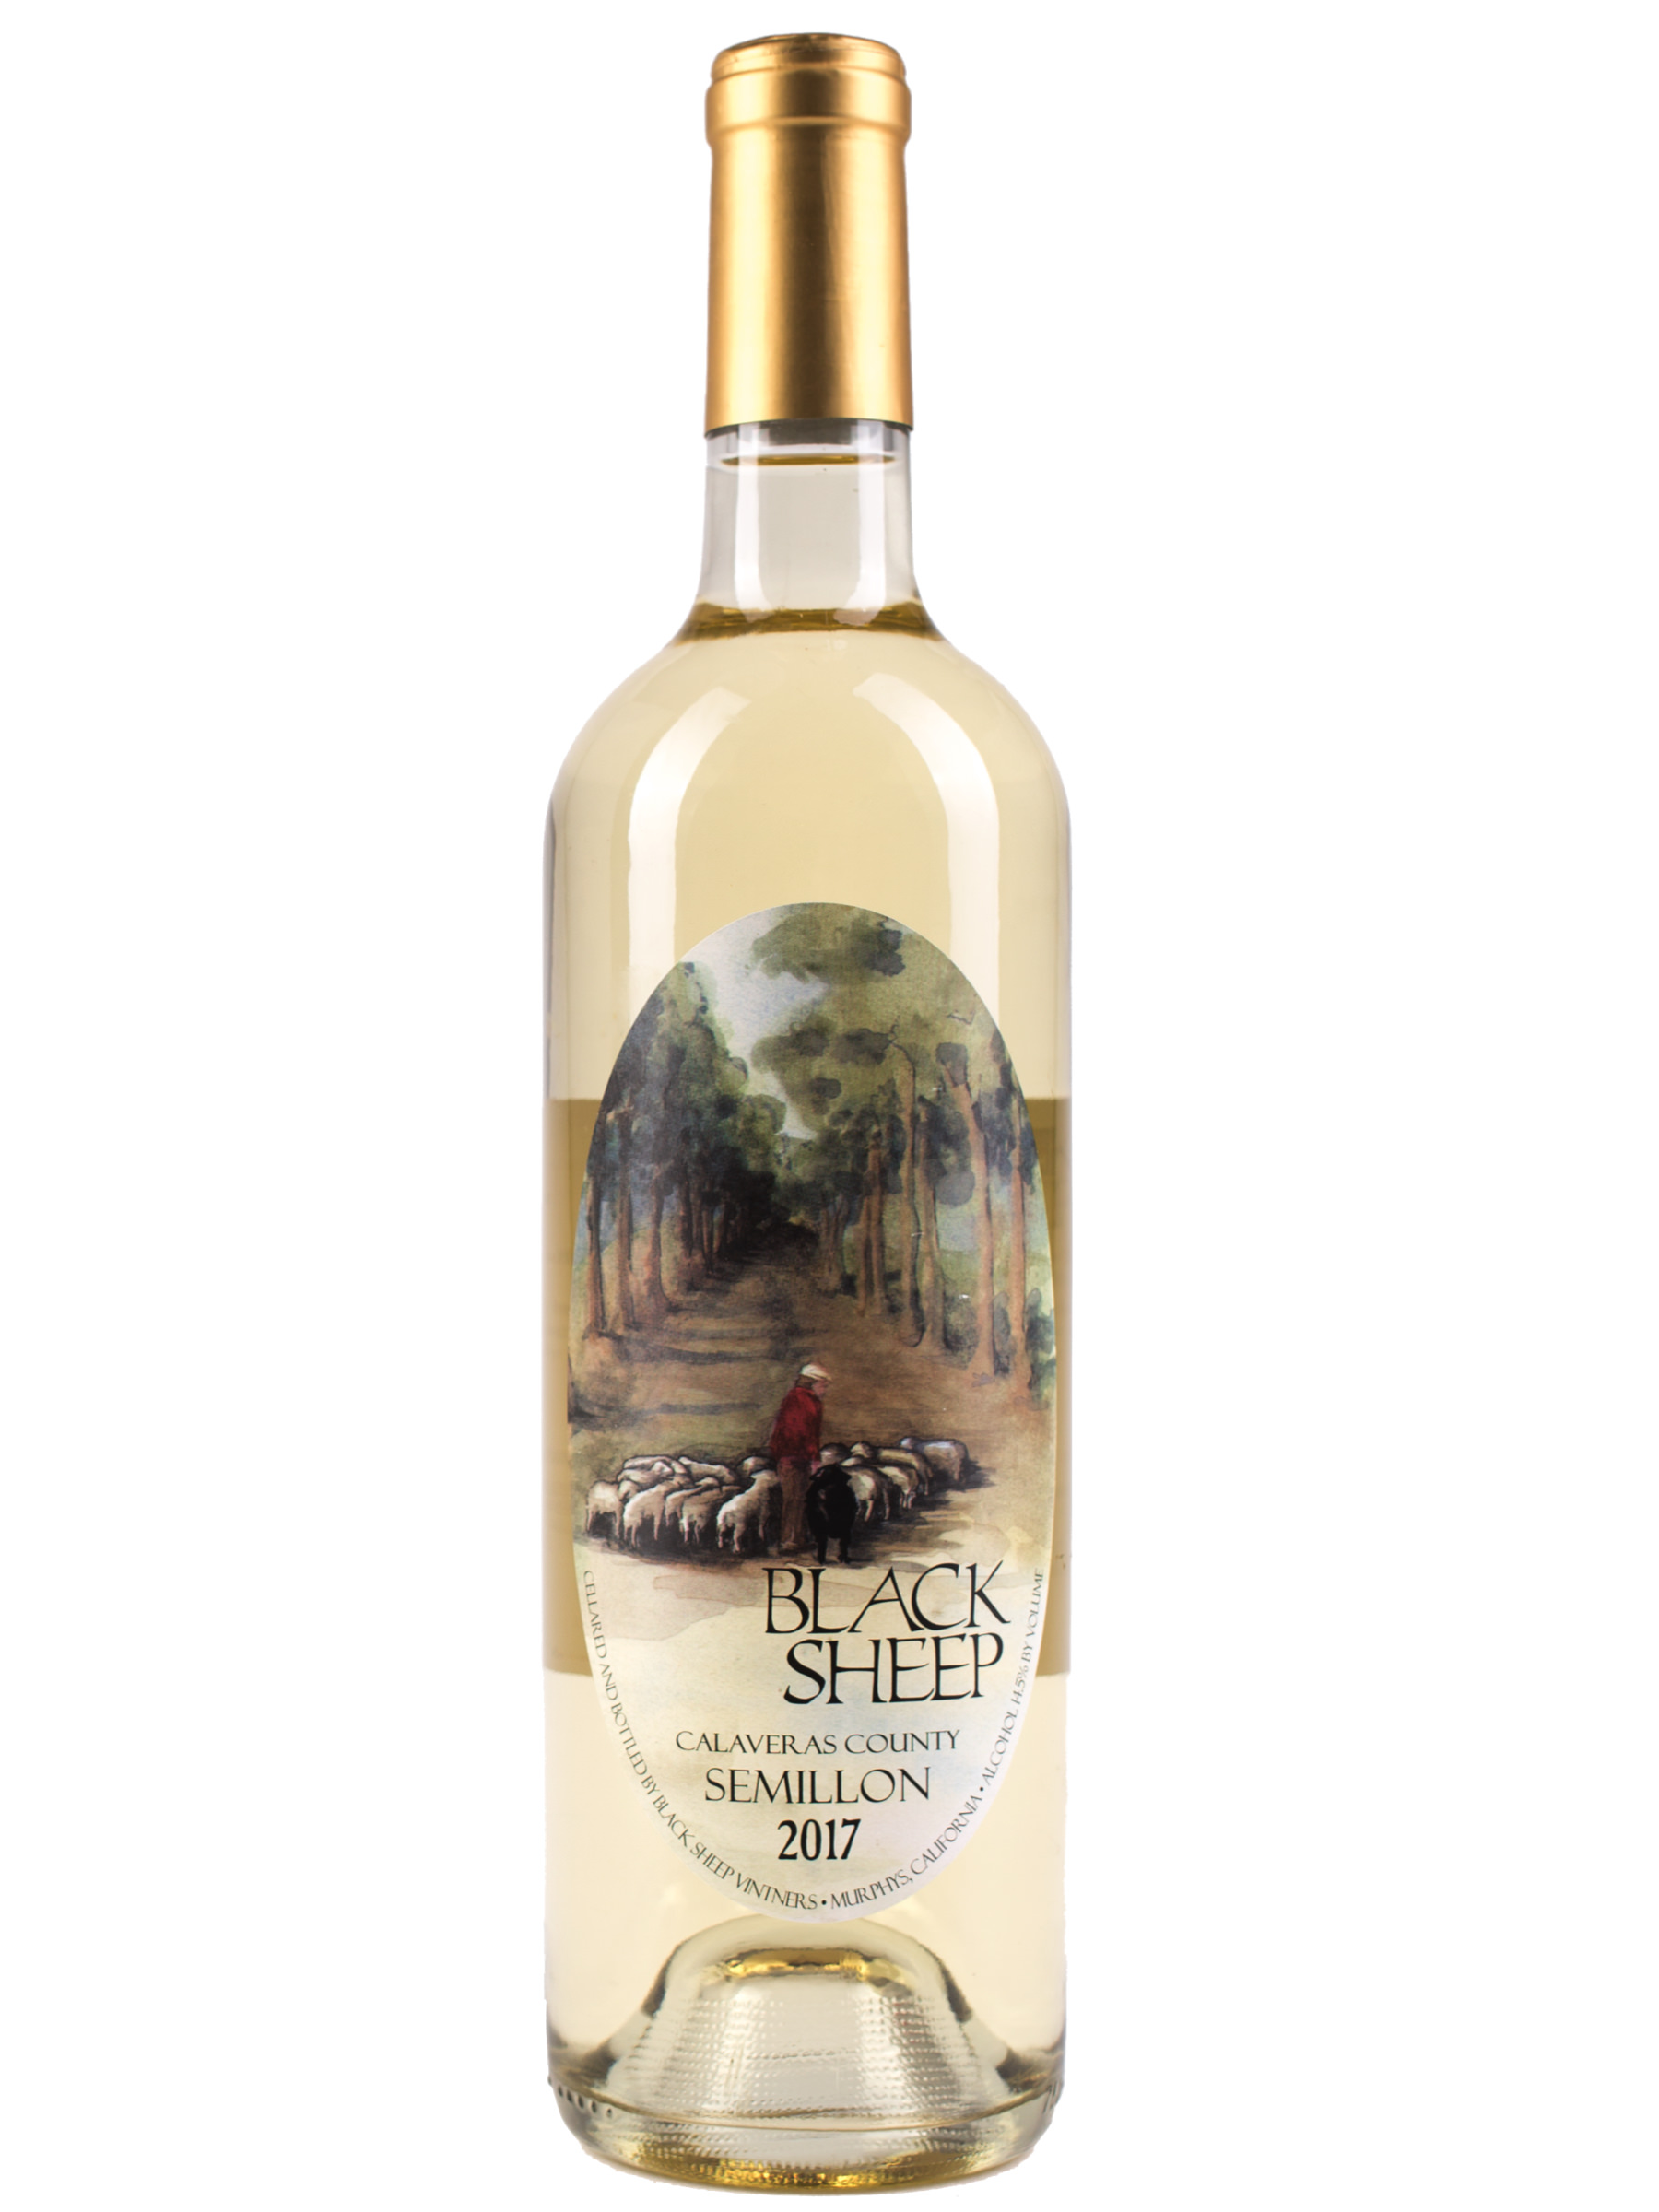 Bottle of Black Sheep Winery Calaveras County Semillion